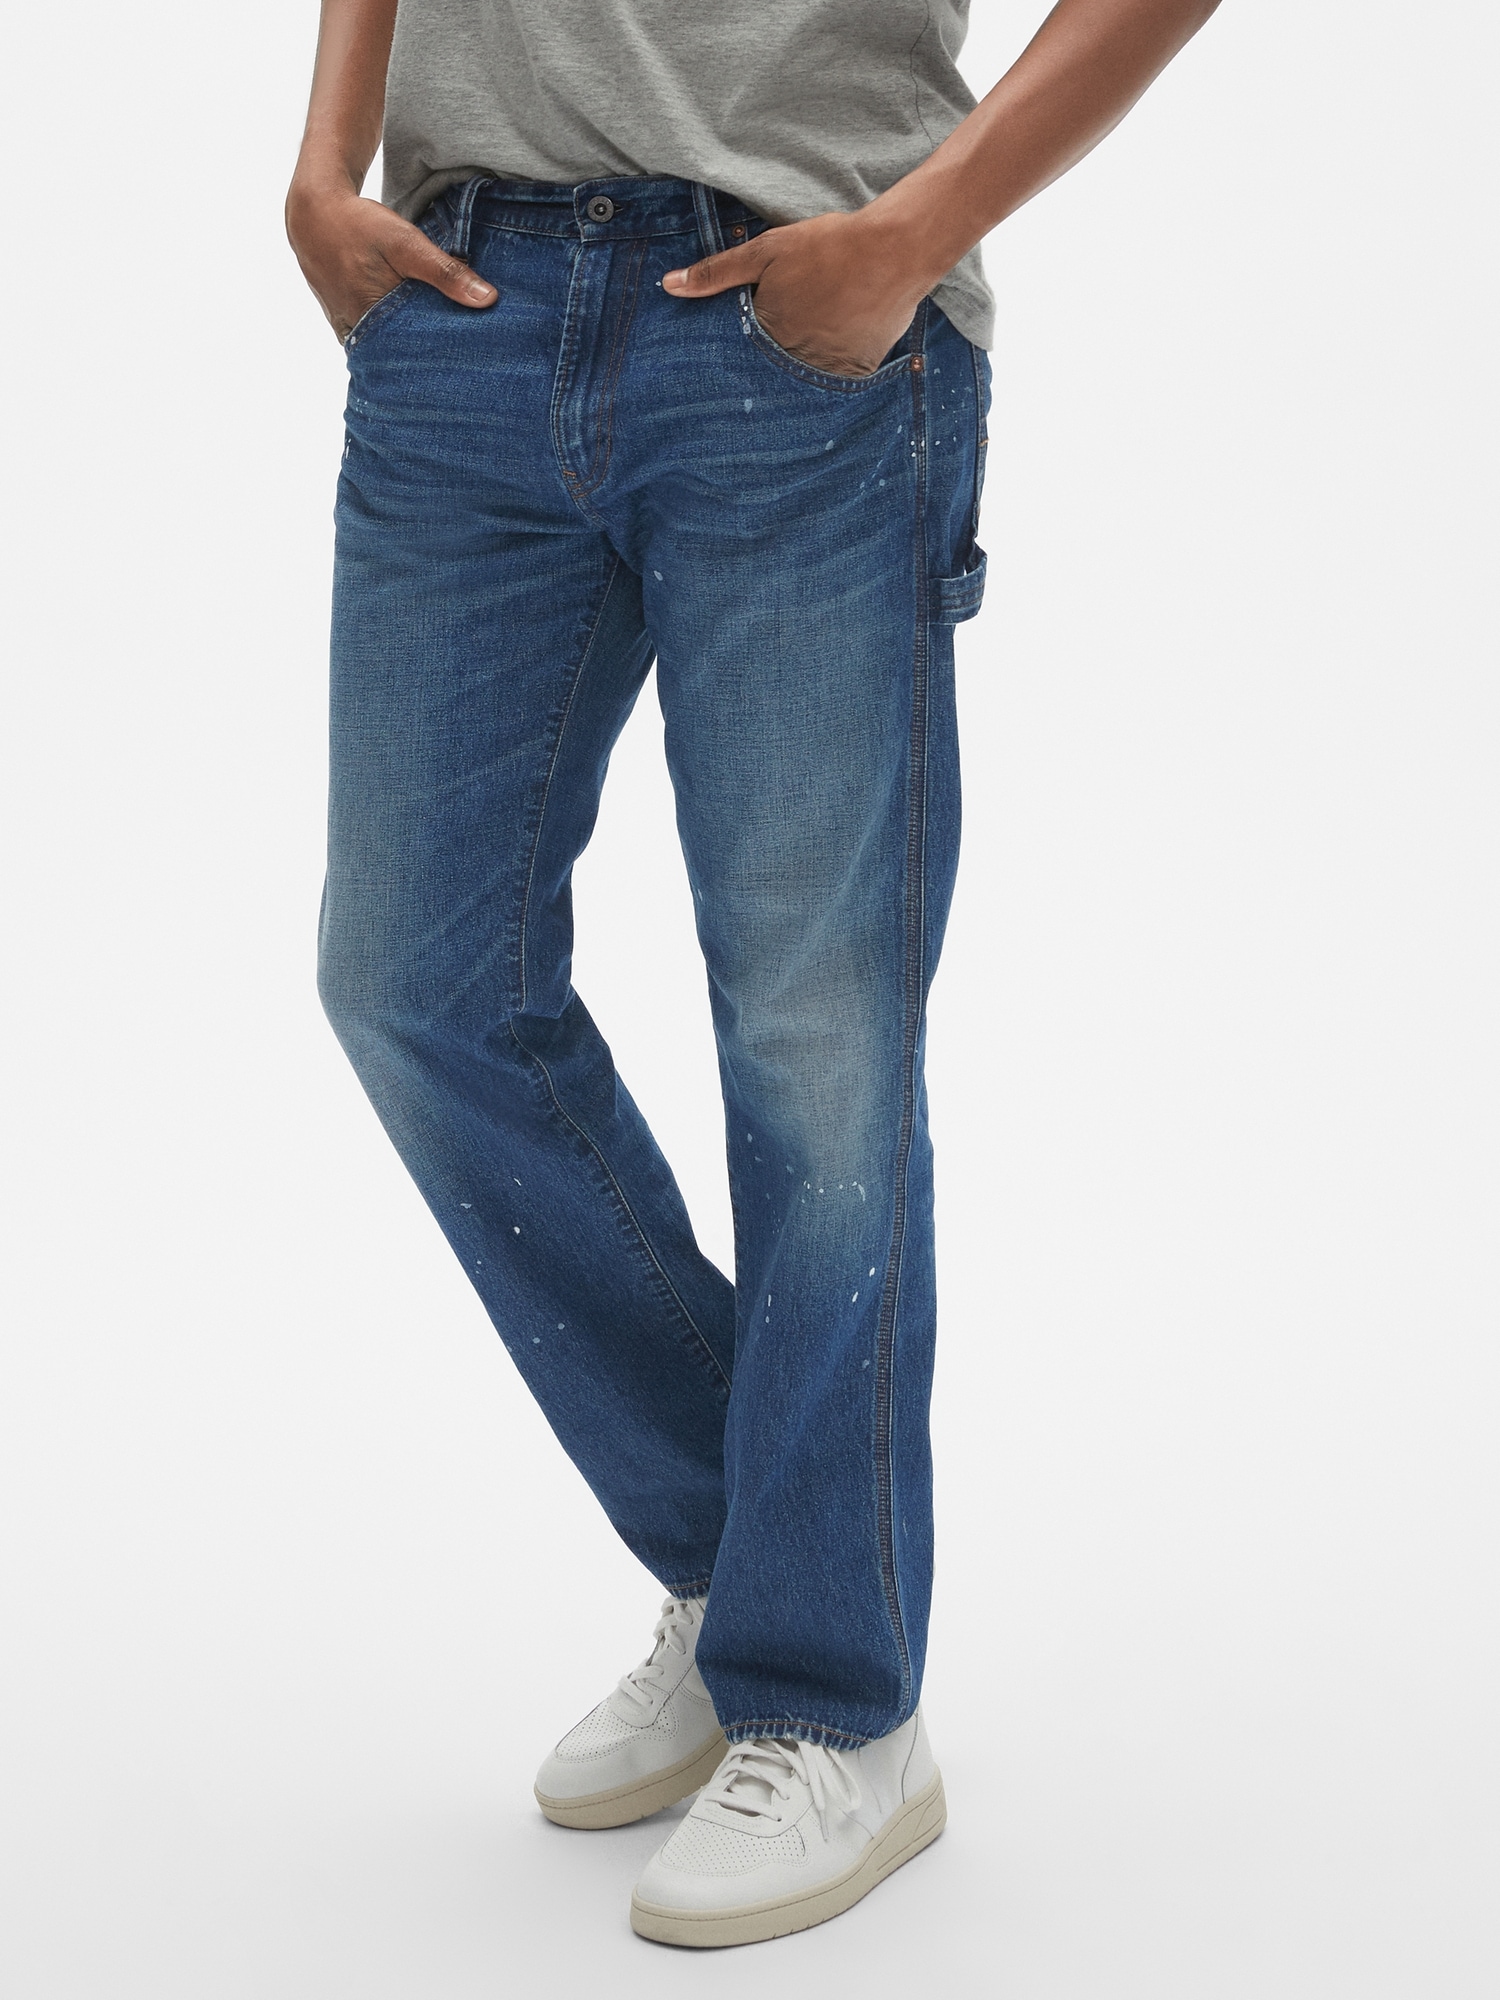 80s denim jeans